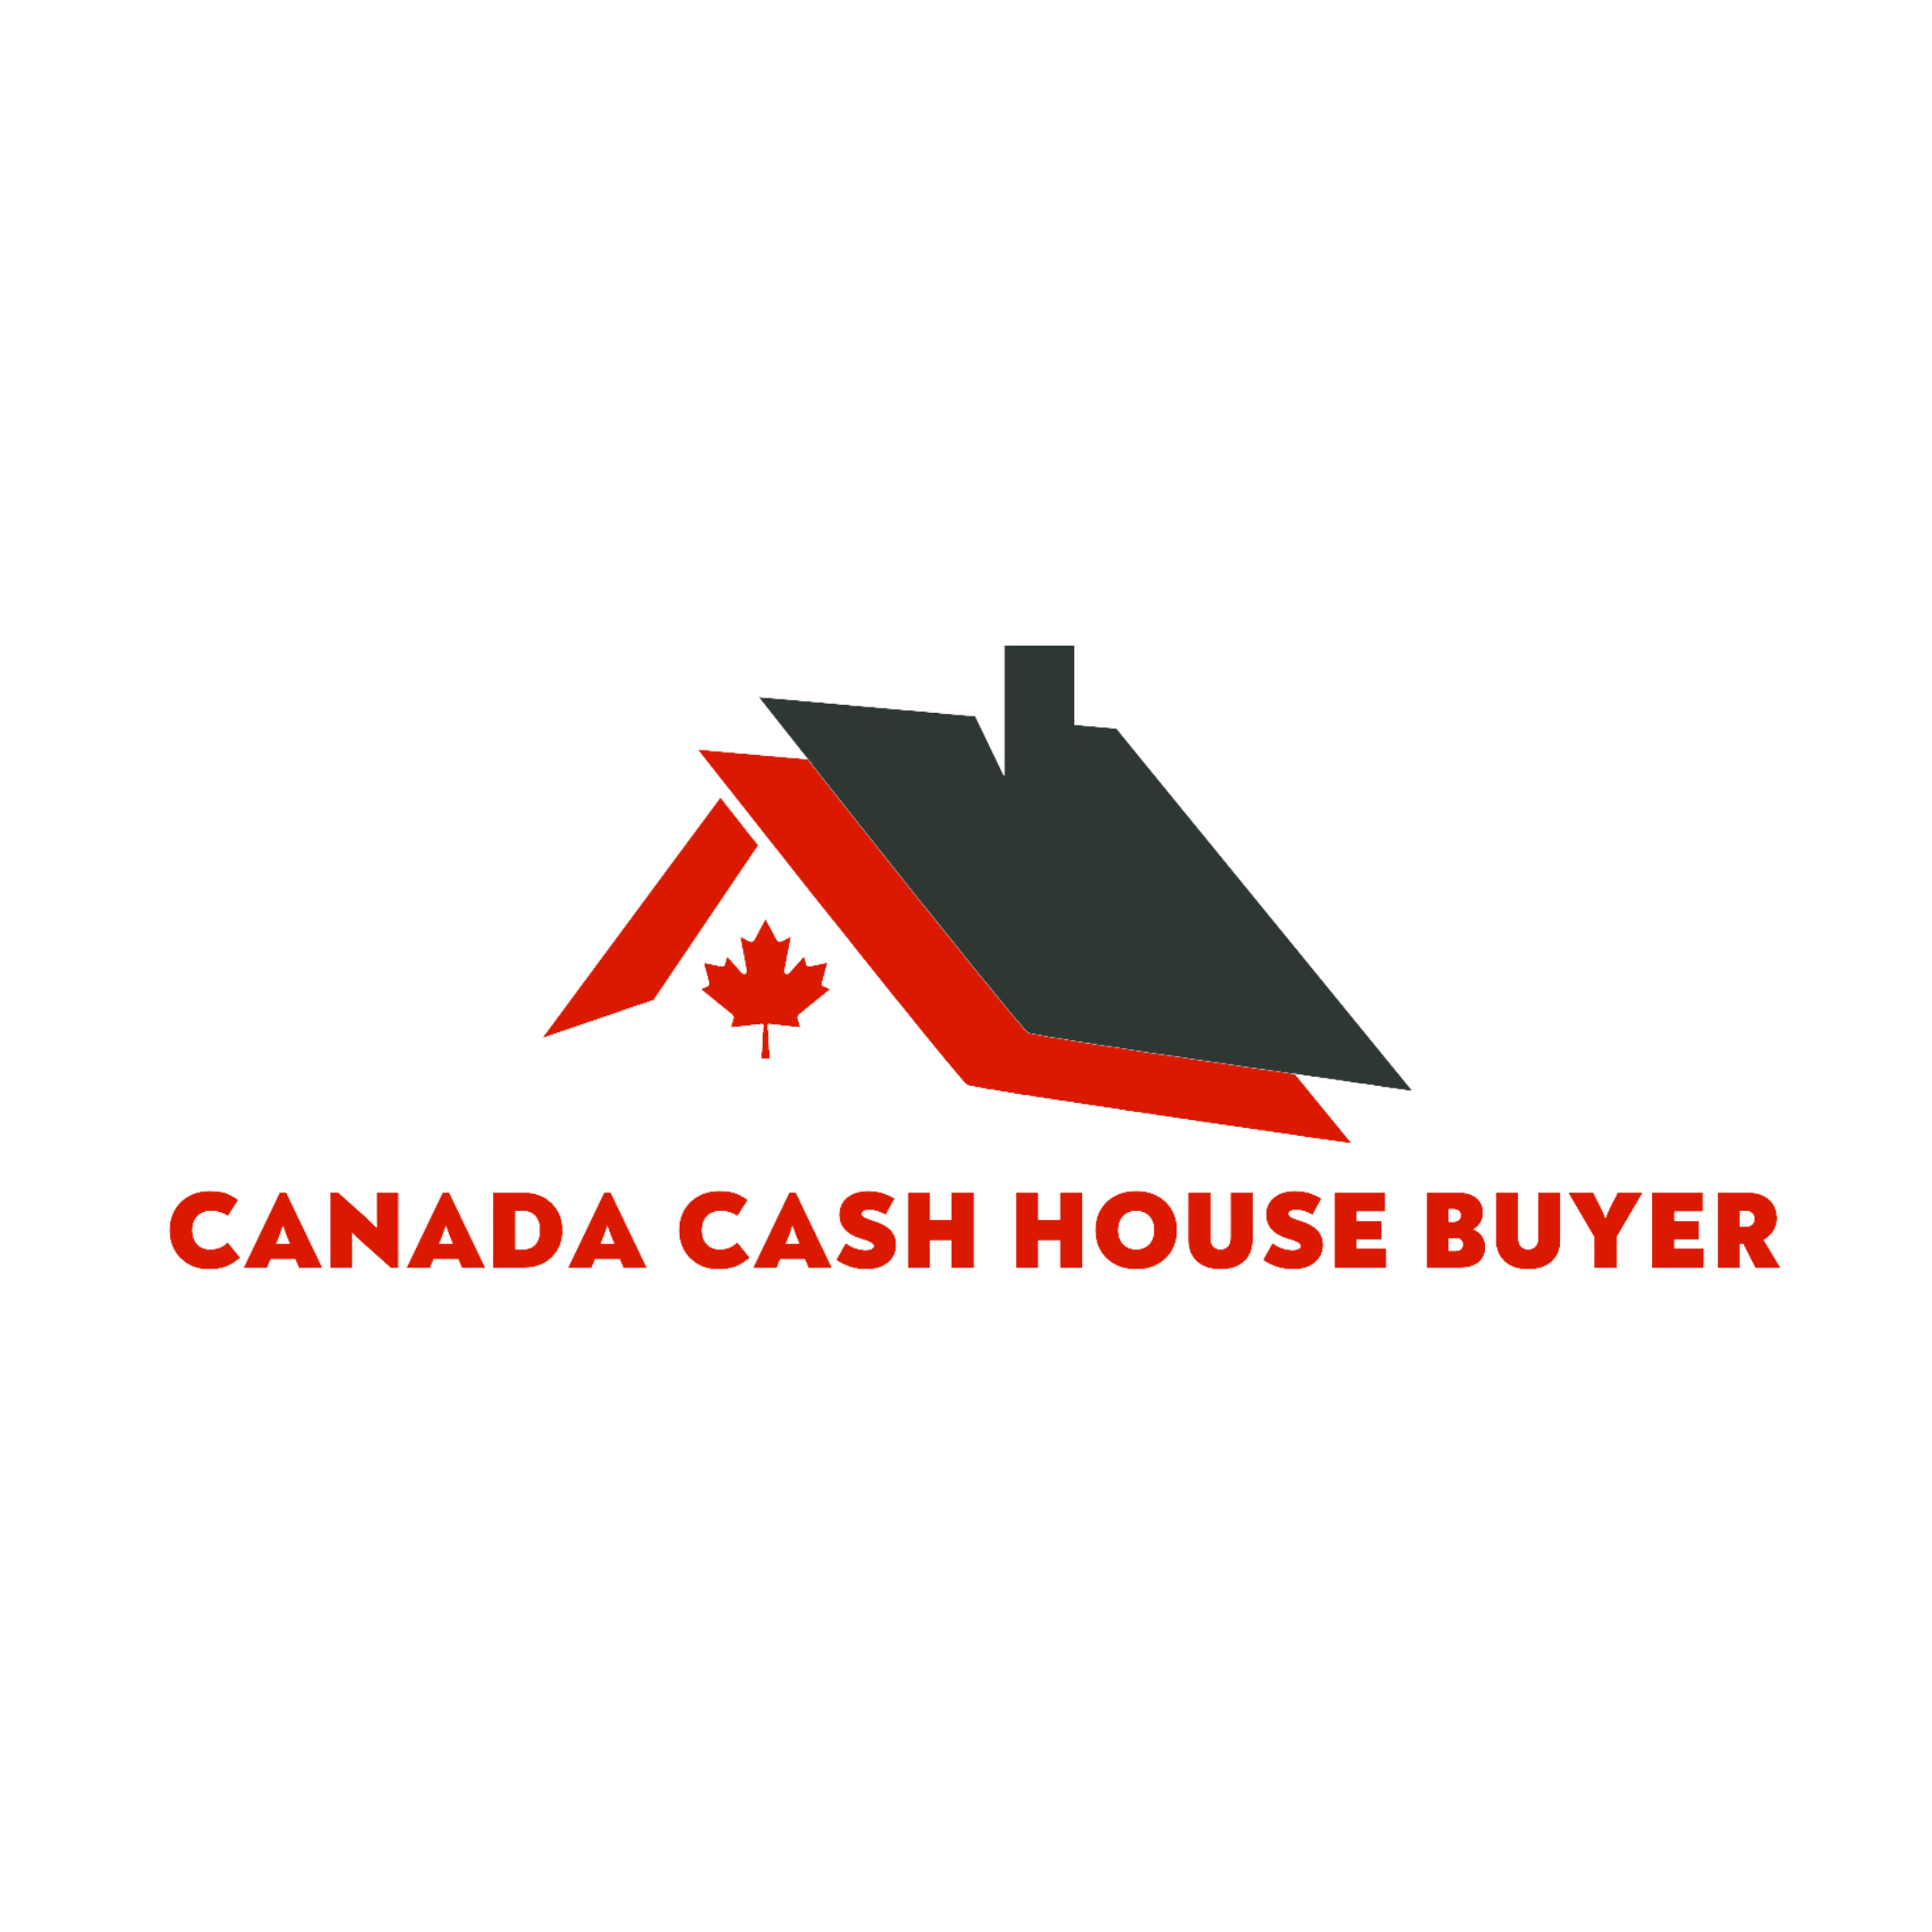 Canada Cash House Buyer logo